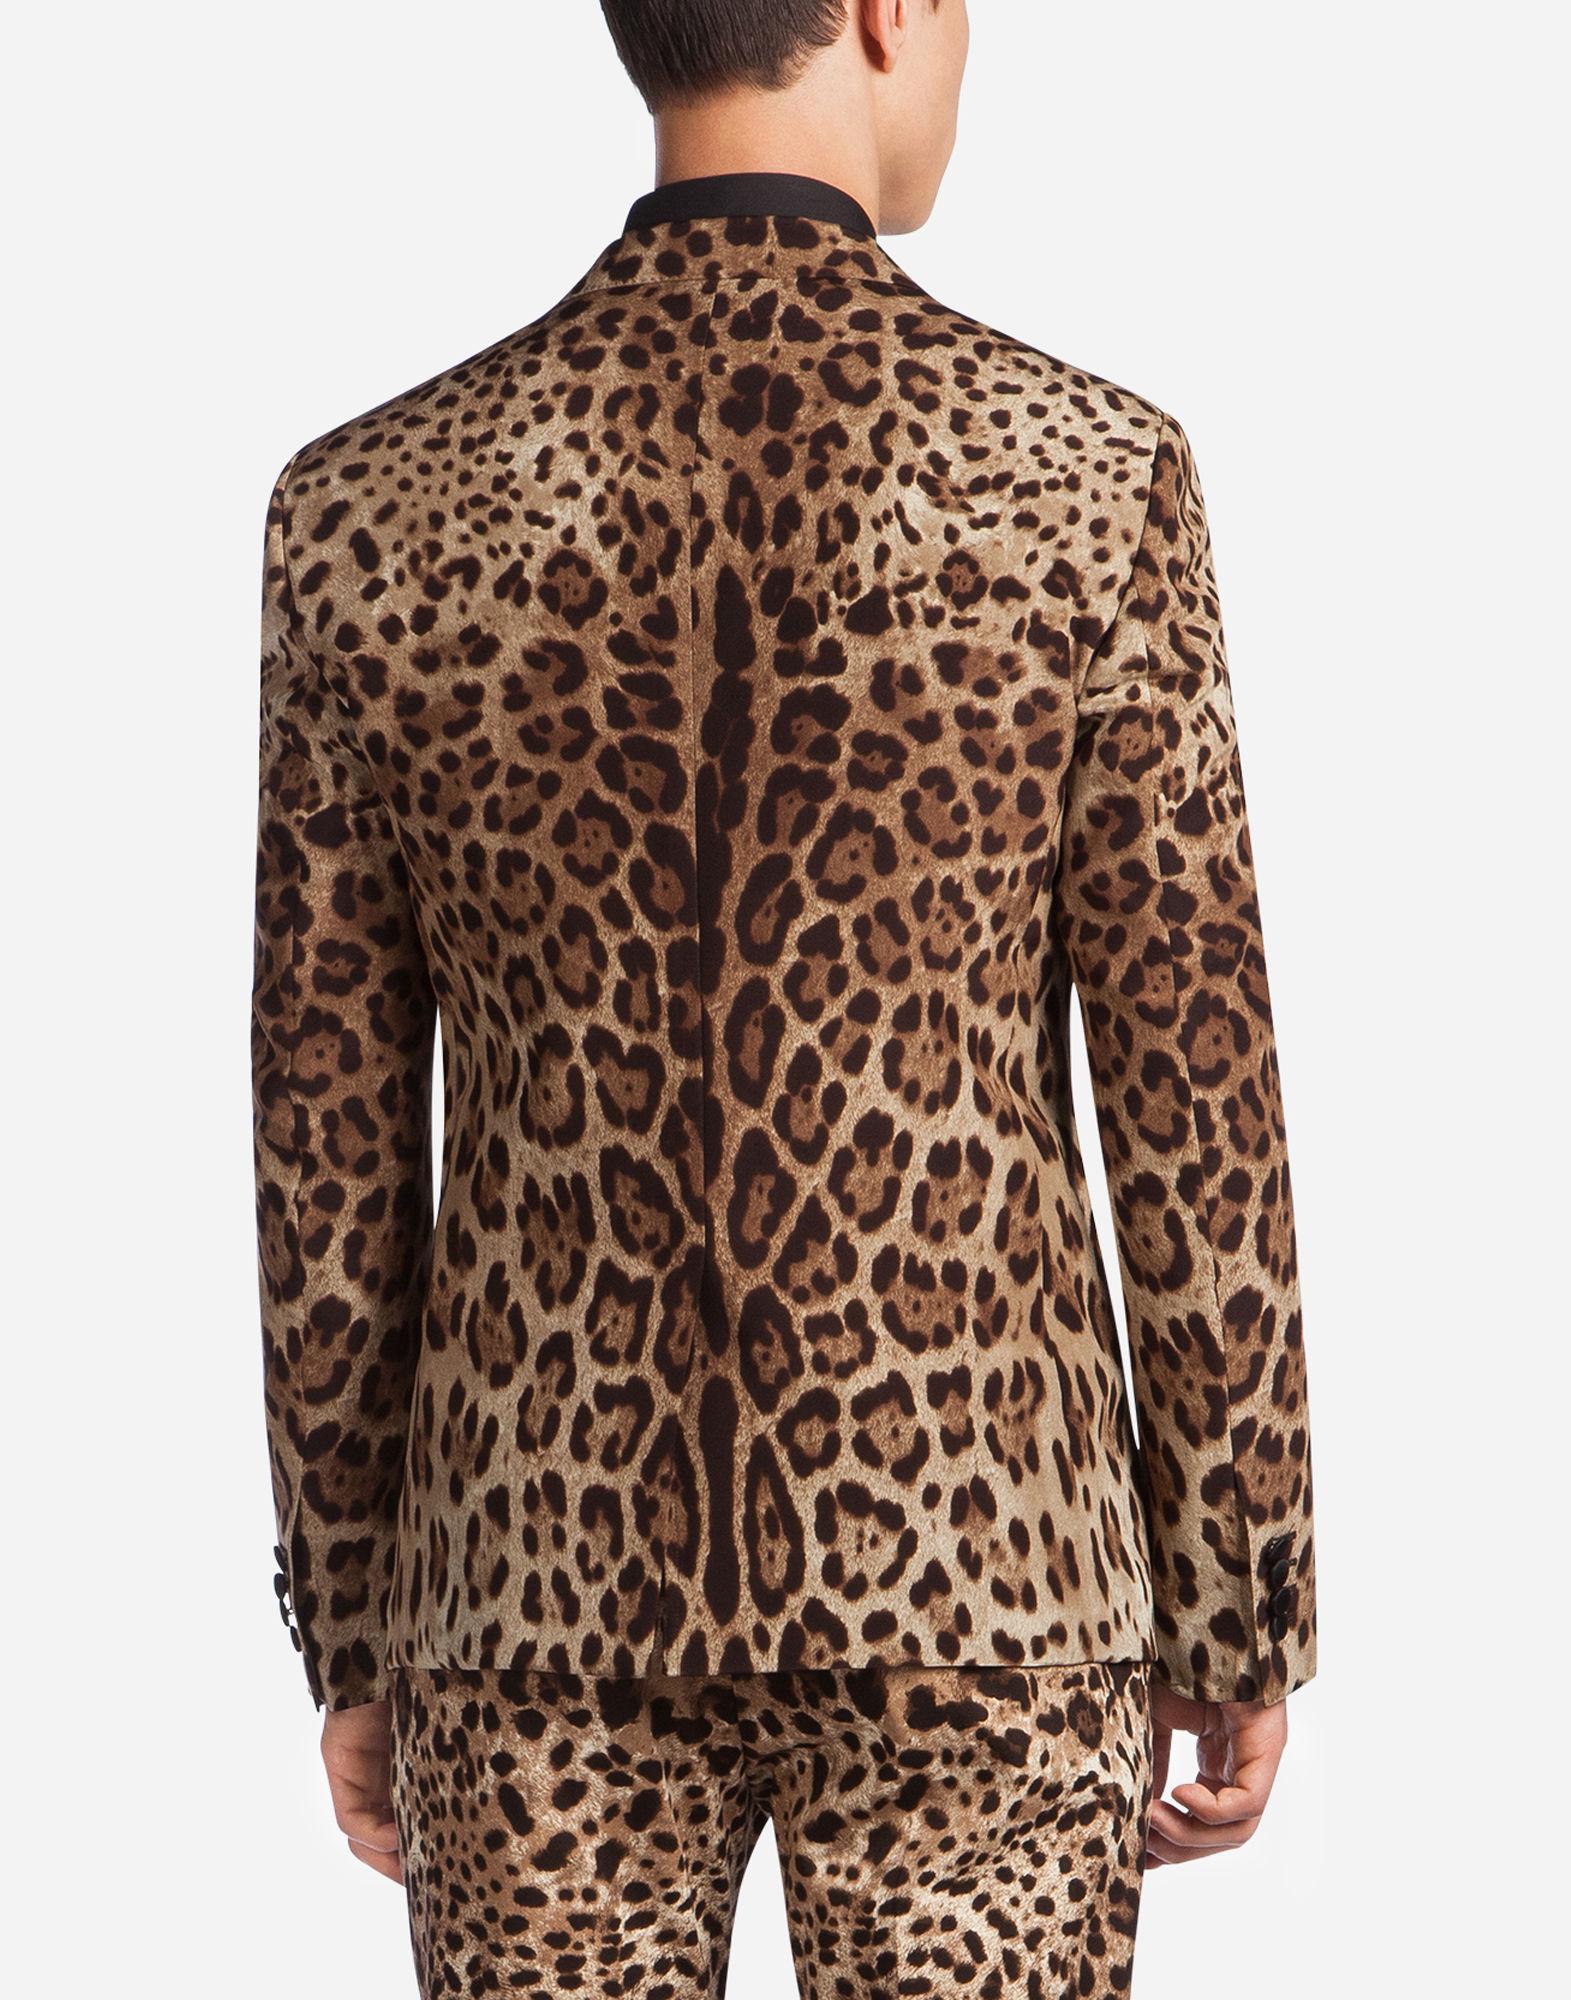 Dolce & Gabbana Leo Print Tuxedo Jacket in Brown for Men - Lyst